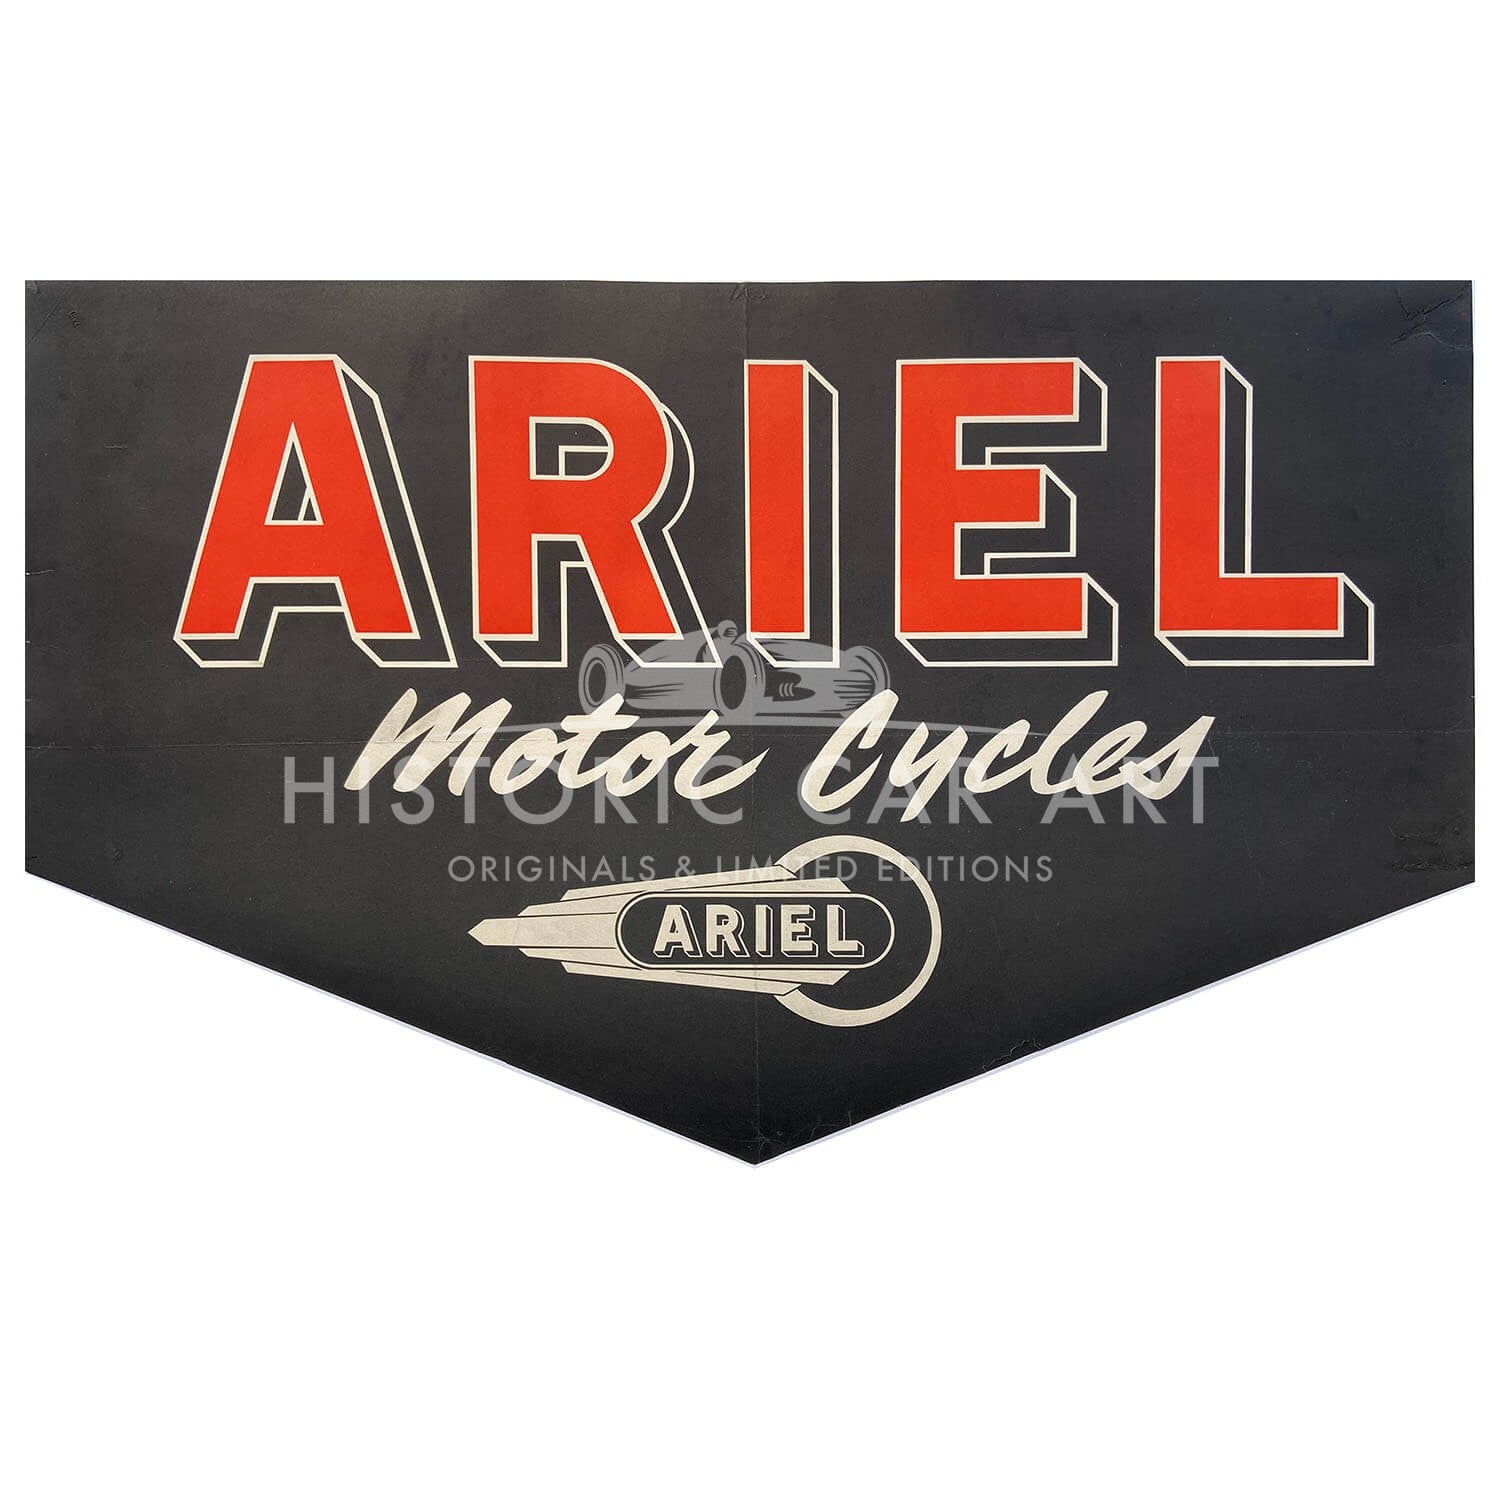 British | Ariel Motorcycles 1930 | Original Poster